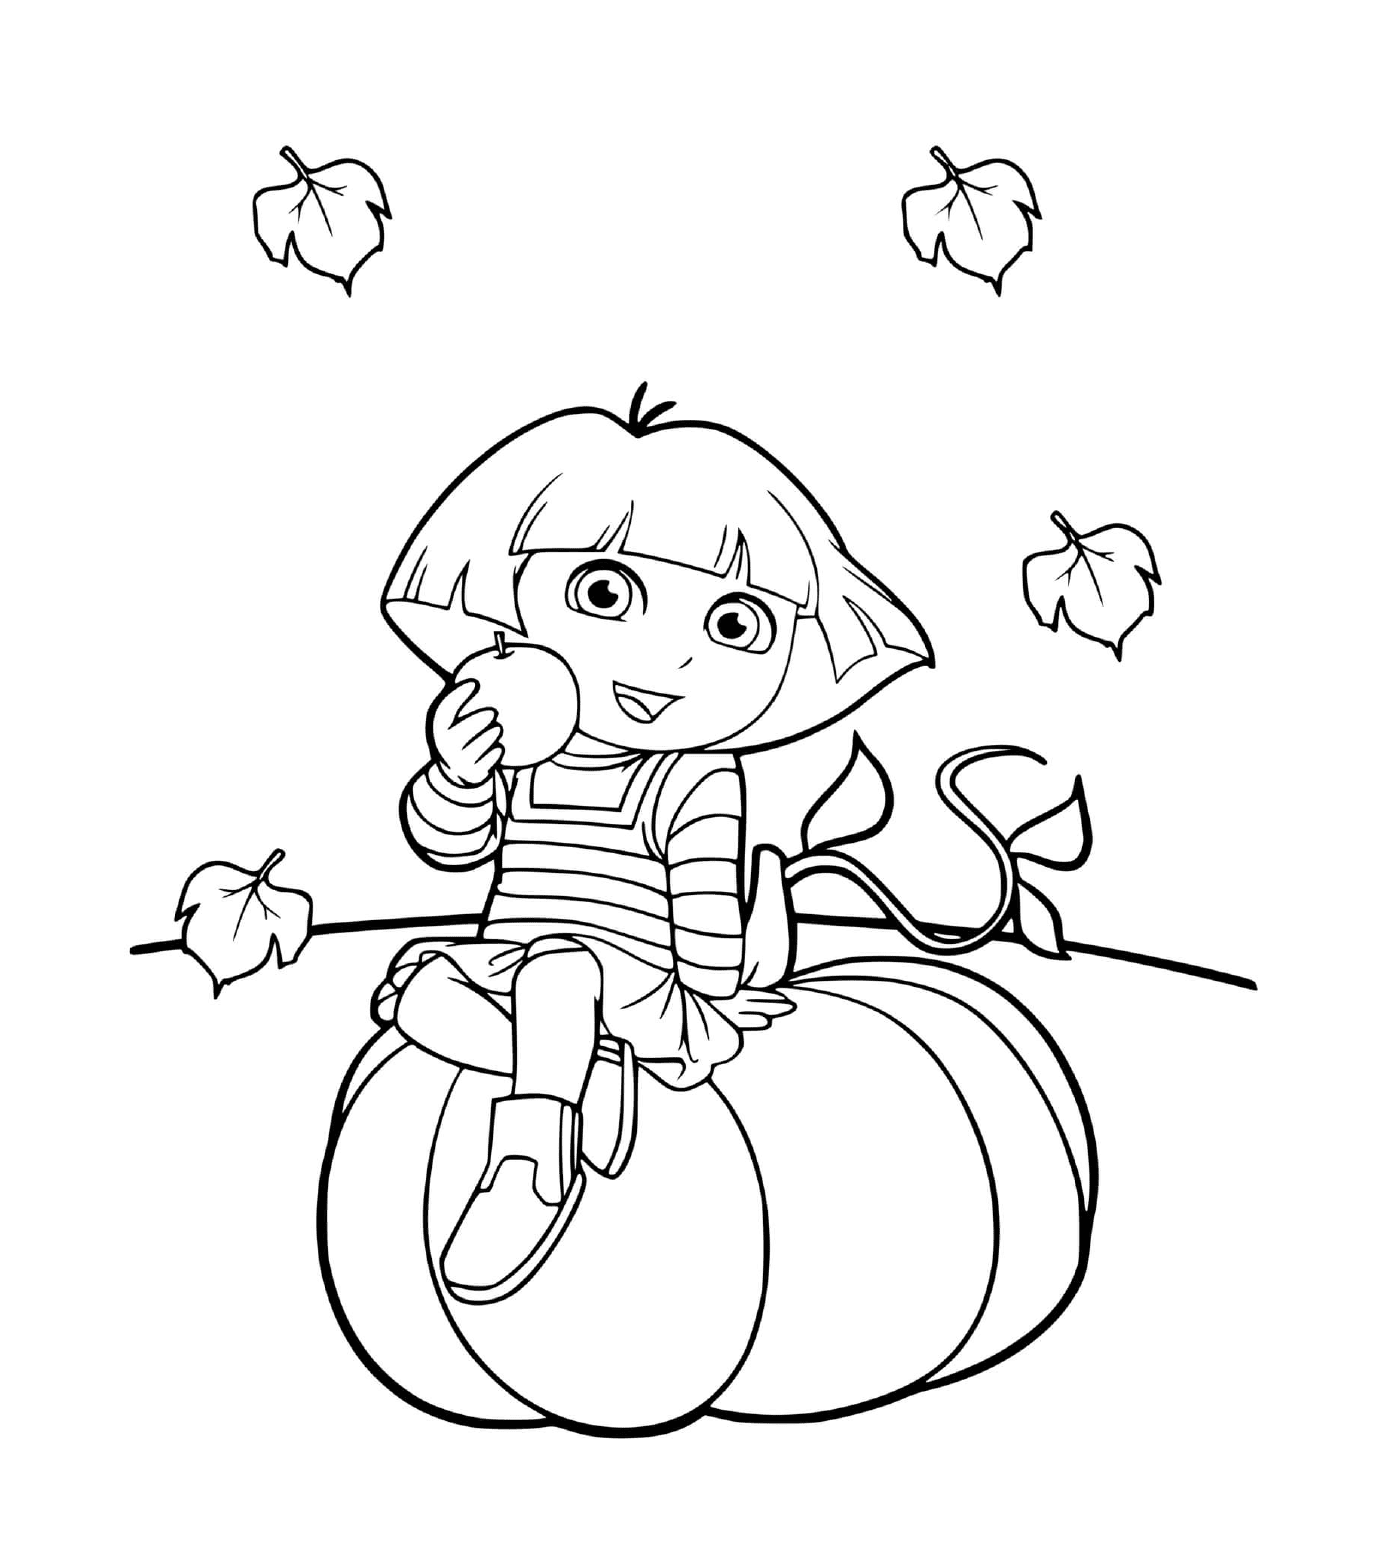  Dora si siede su una zucca per Halloween 